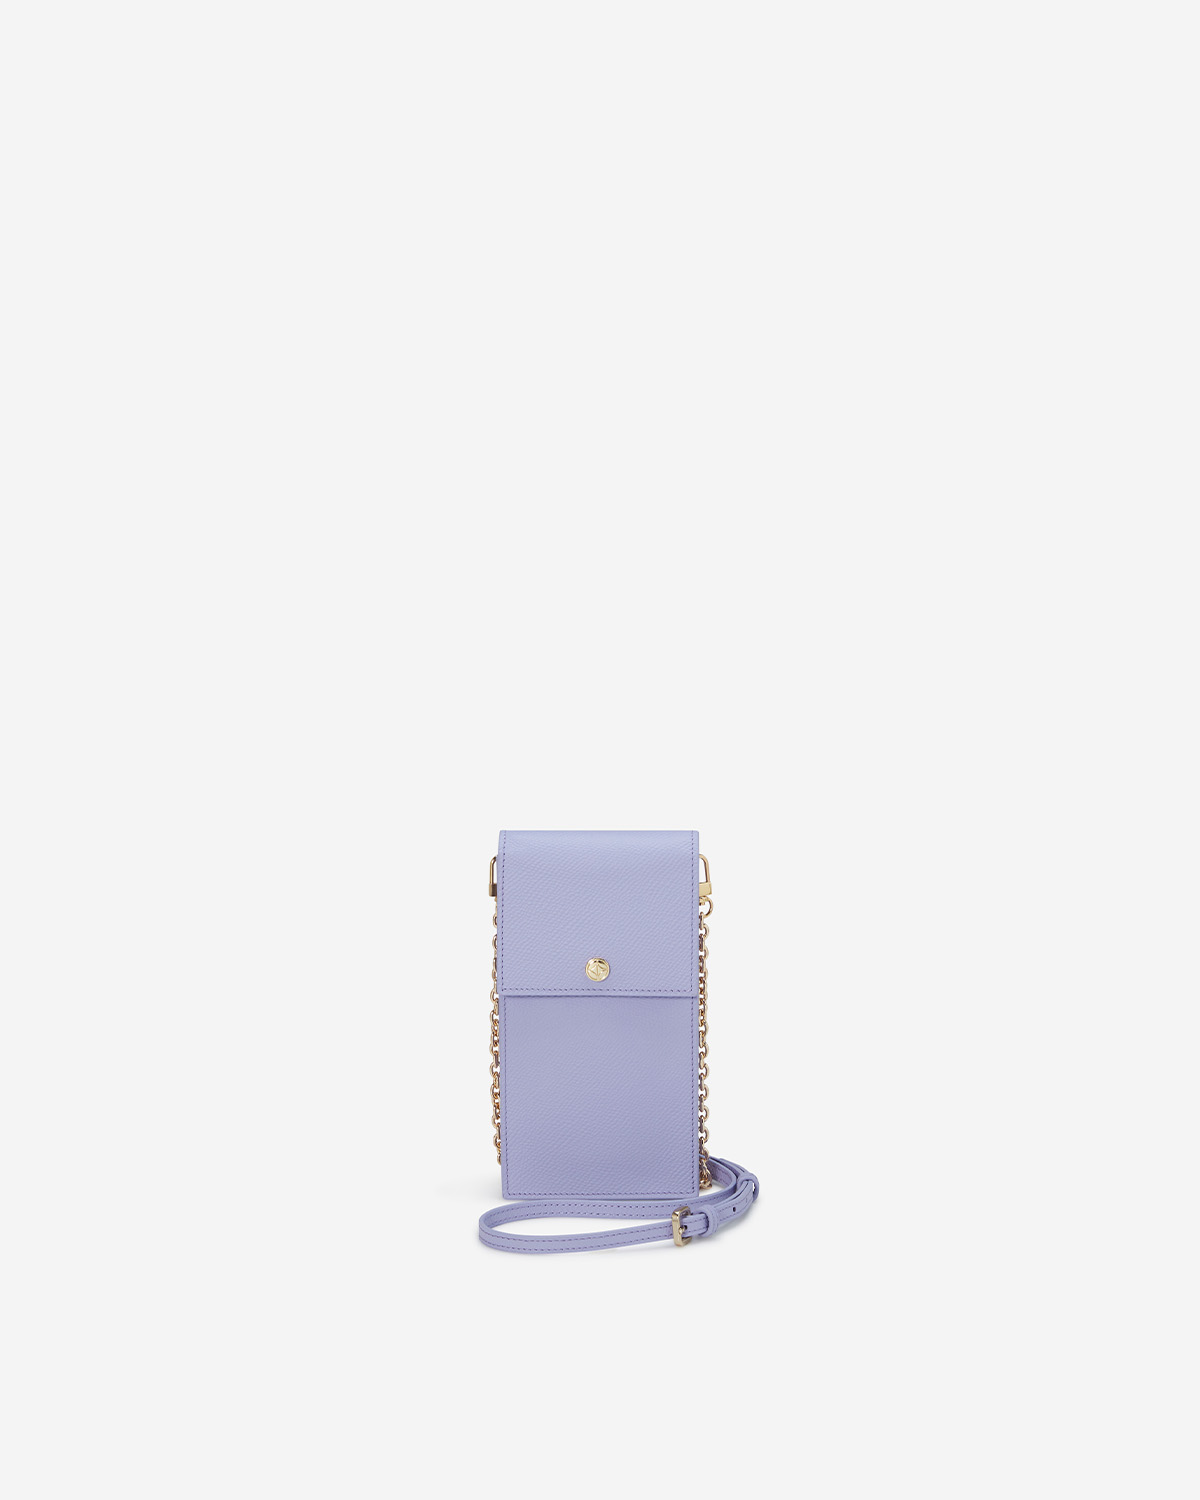 VERA Emily Phone Pouch with Leather Gold Chain in Charming Purple กระเป๋าใส่โทรศัพท์หนังแท้ พร้อมฟังก์ชั่นกระเป๋าสตางค์ มาพร้อมสายสะพายโซ่หนังถอดได้ สีม่วง